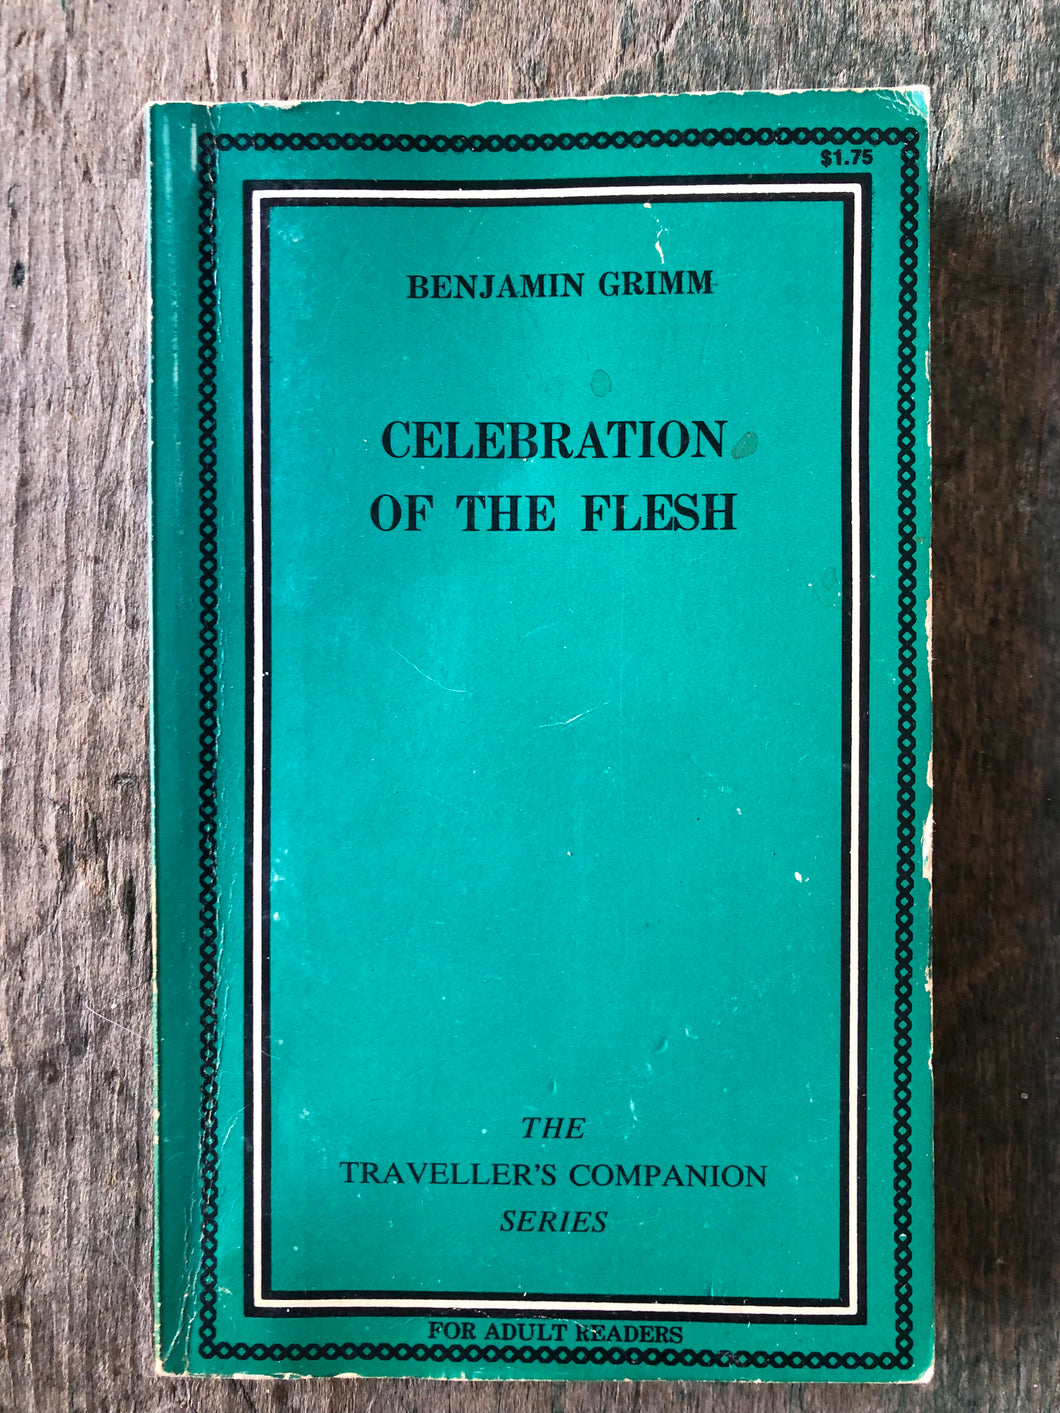 Celebration of the Flesh by Benjamin Grimm